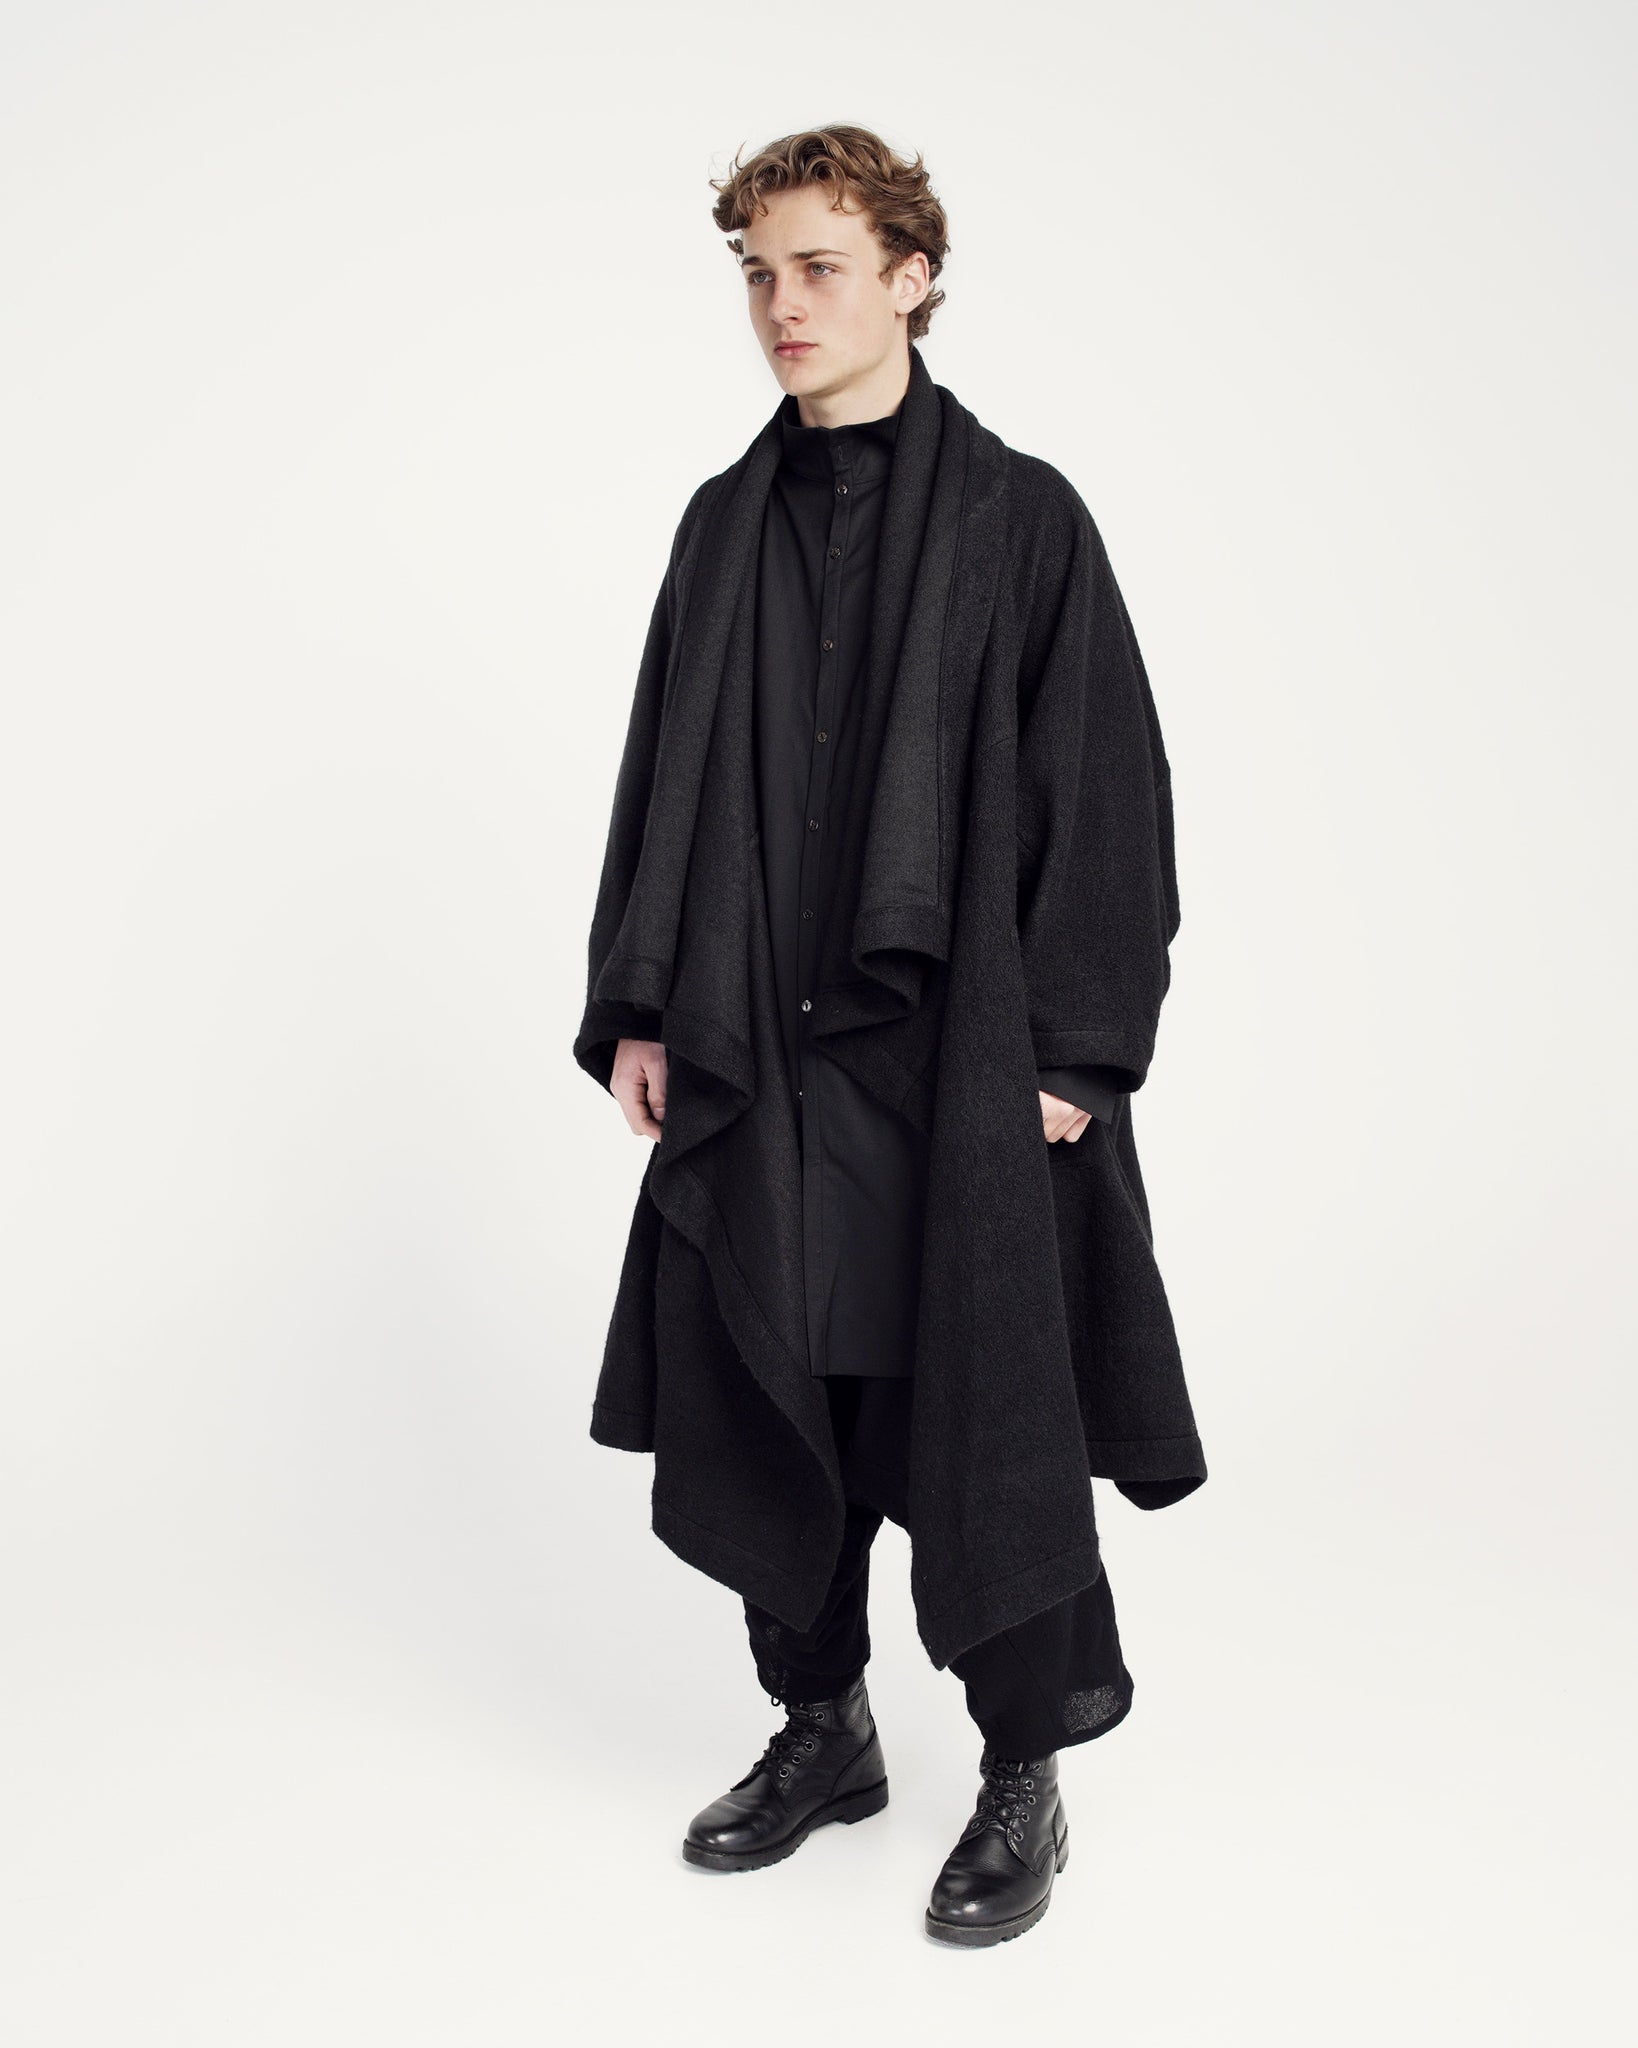 ROSEN Classics O-Ren Coat in Black Boiled Wool